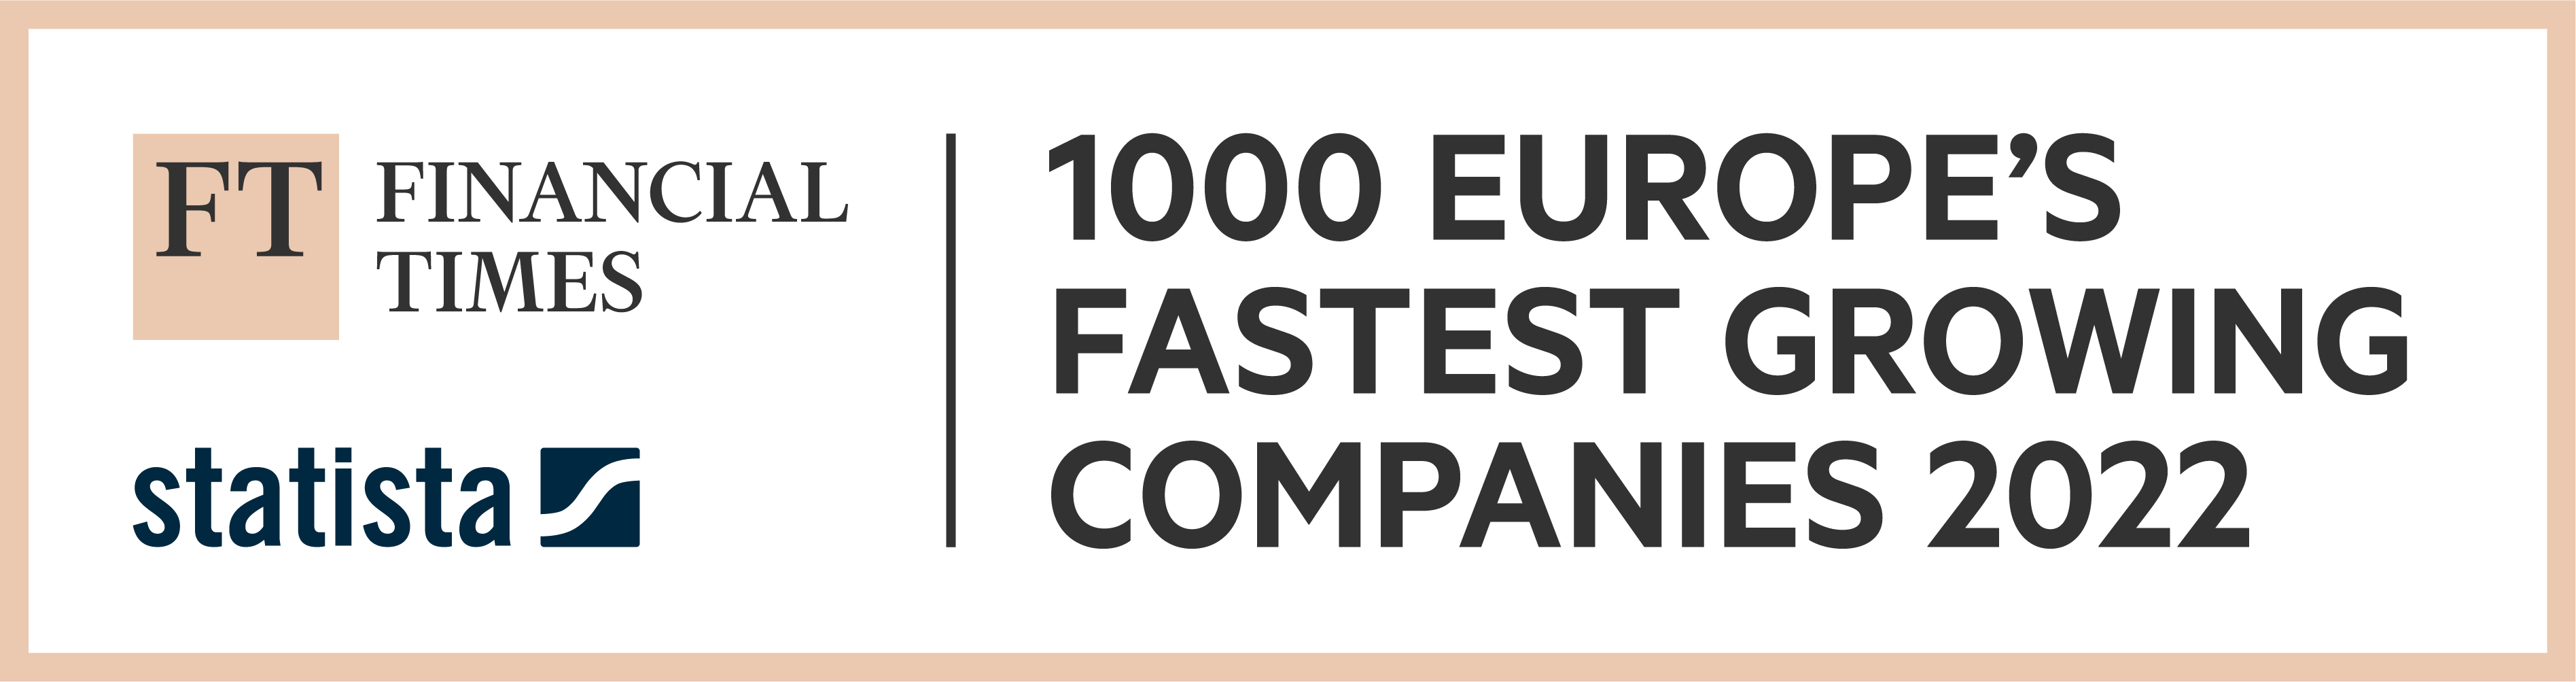 Europe Fastest Growing Companies badge